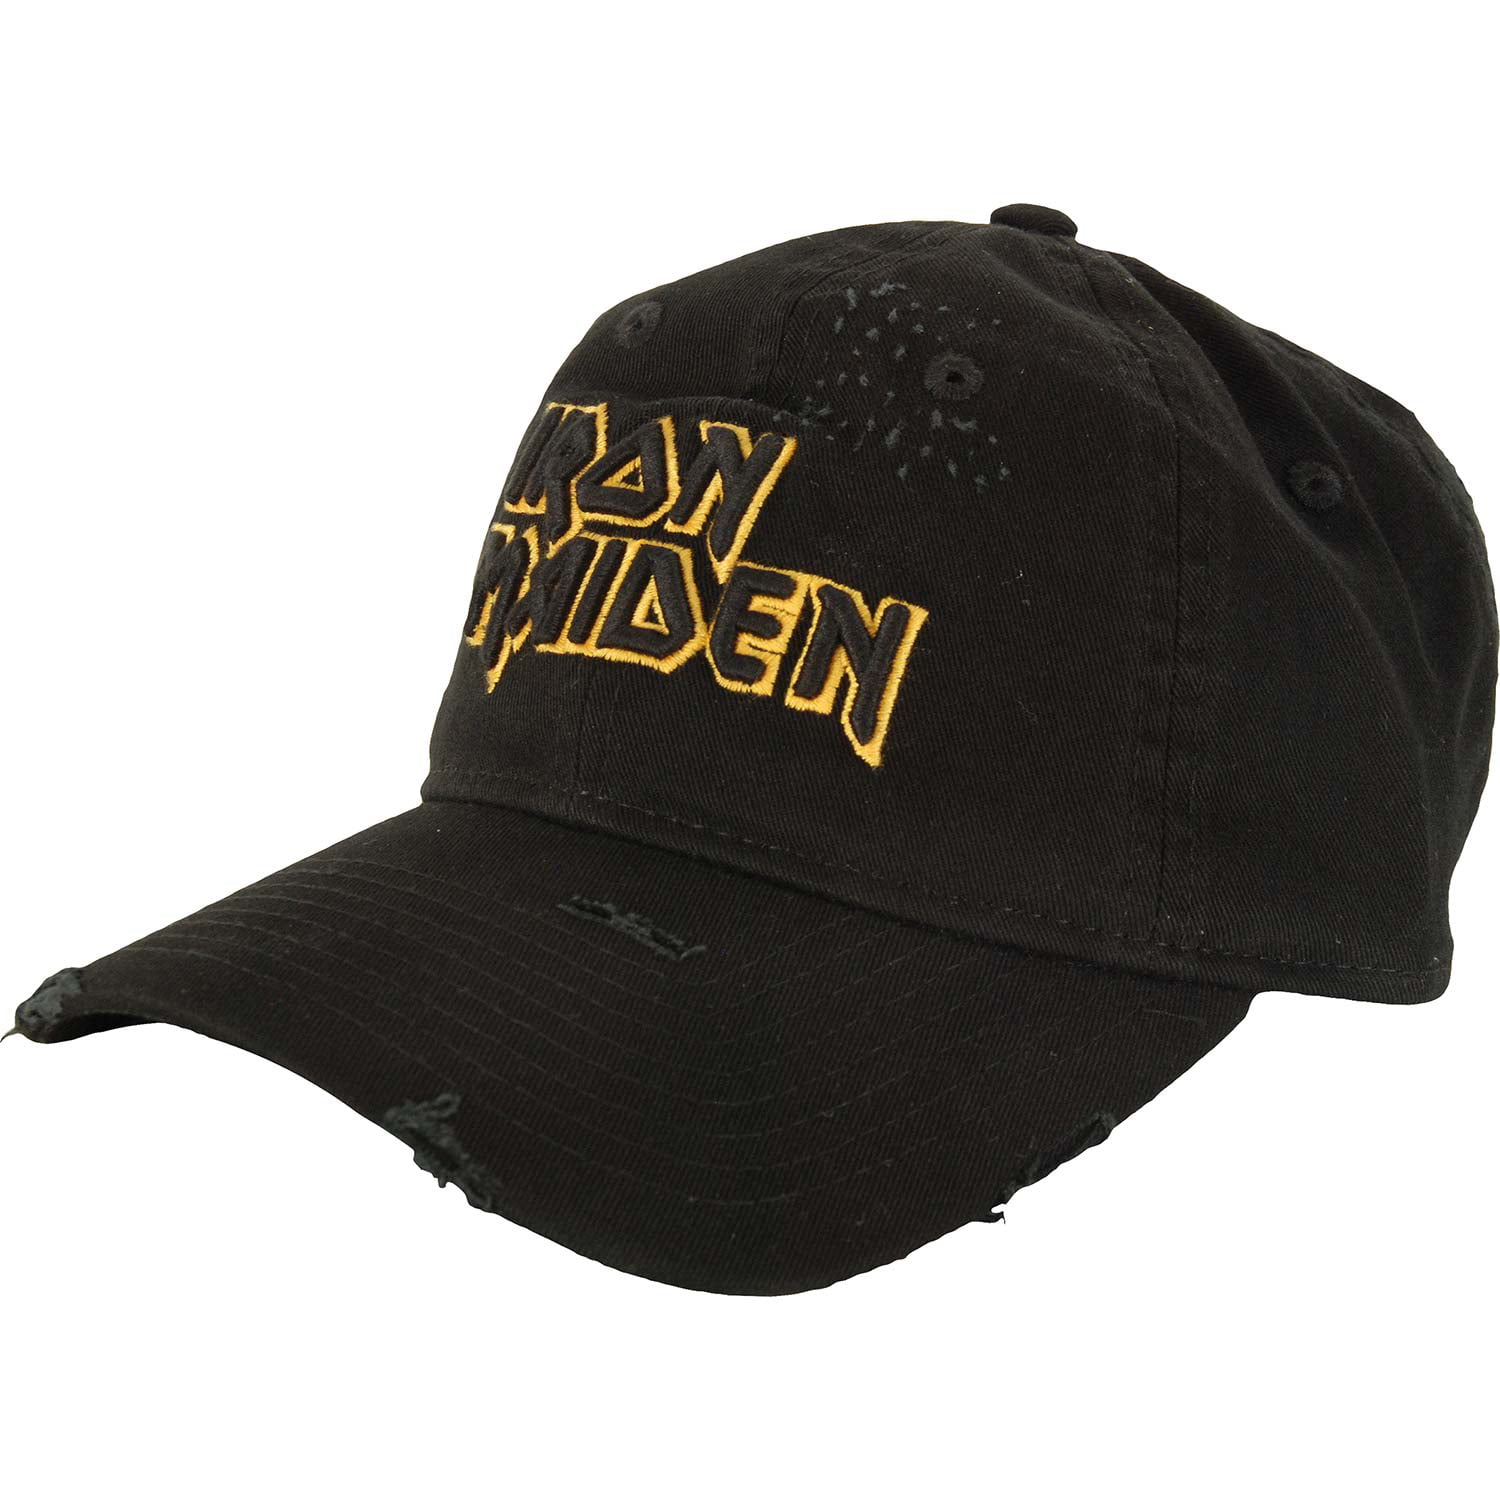 Iron Maiden - Iron Maiden Men's Baseball Cap Black - Walmart.com ...